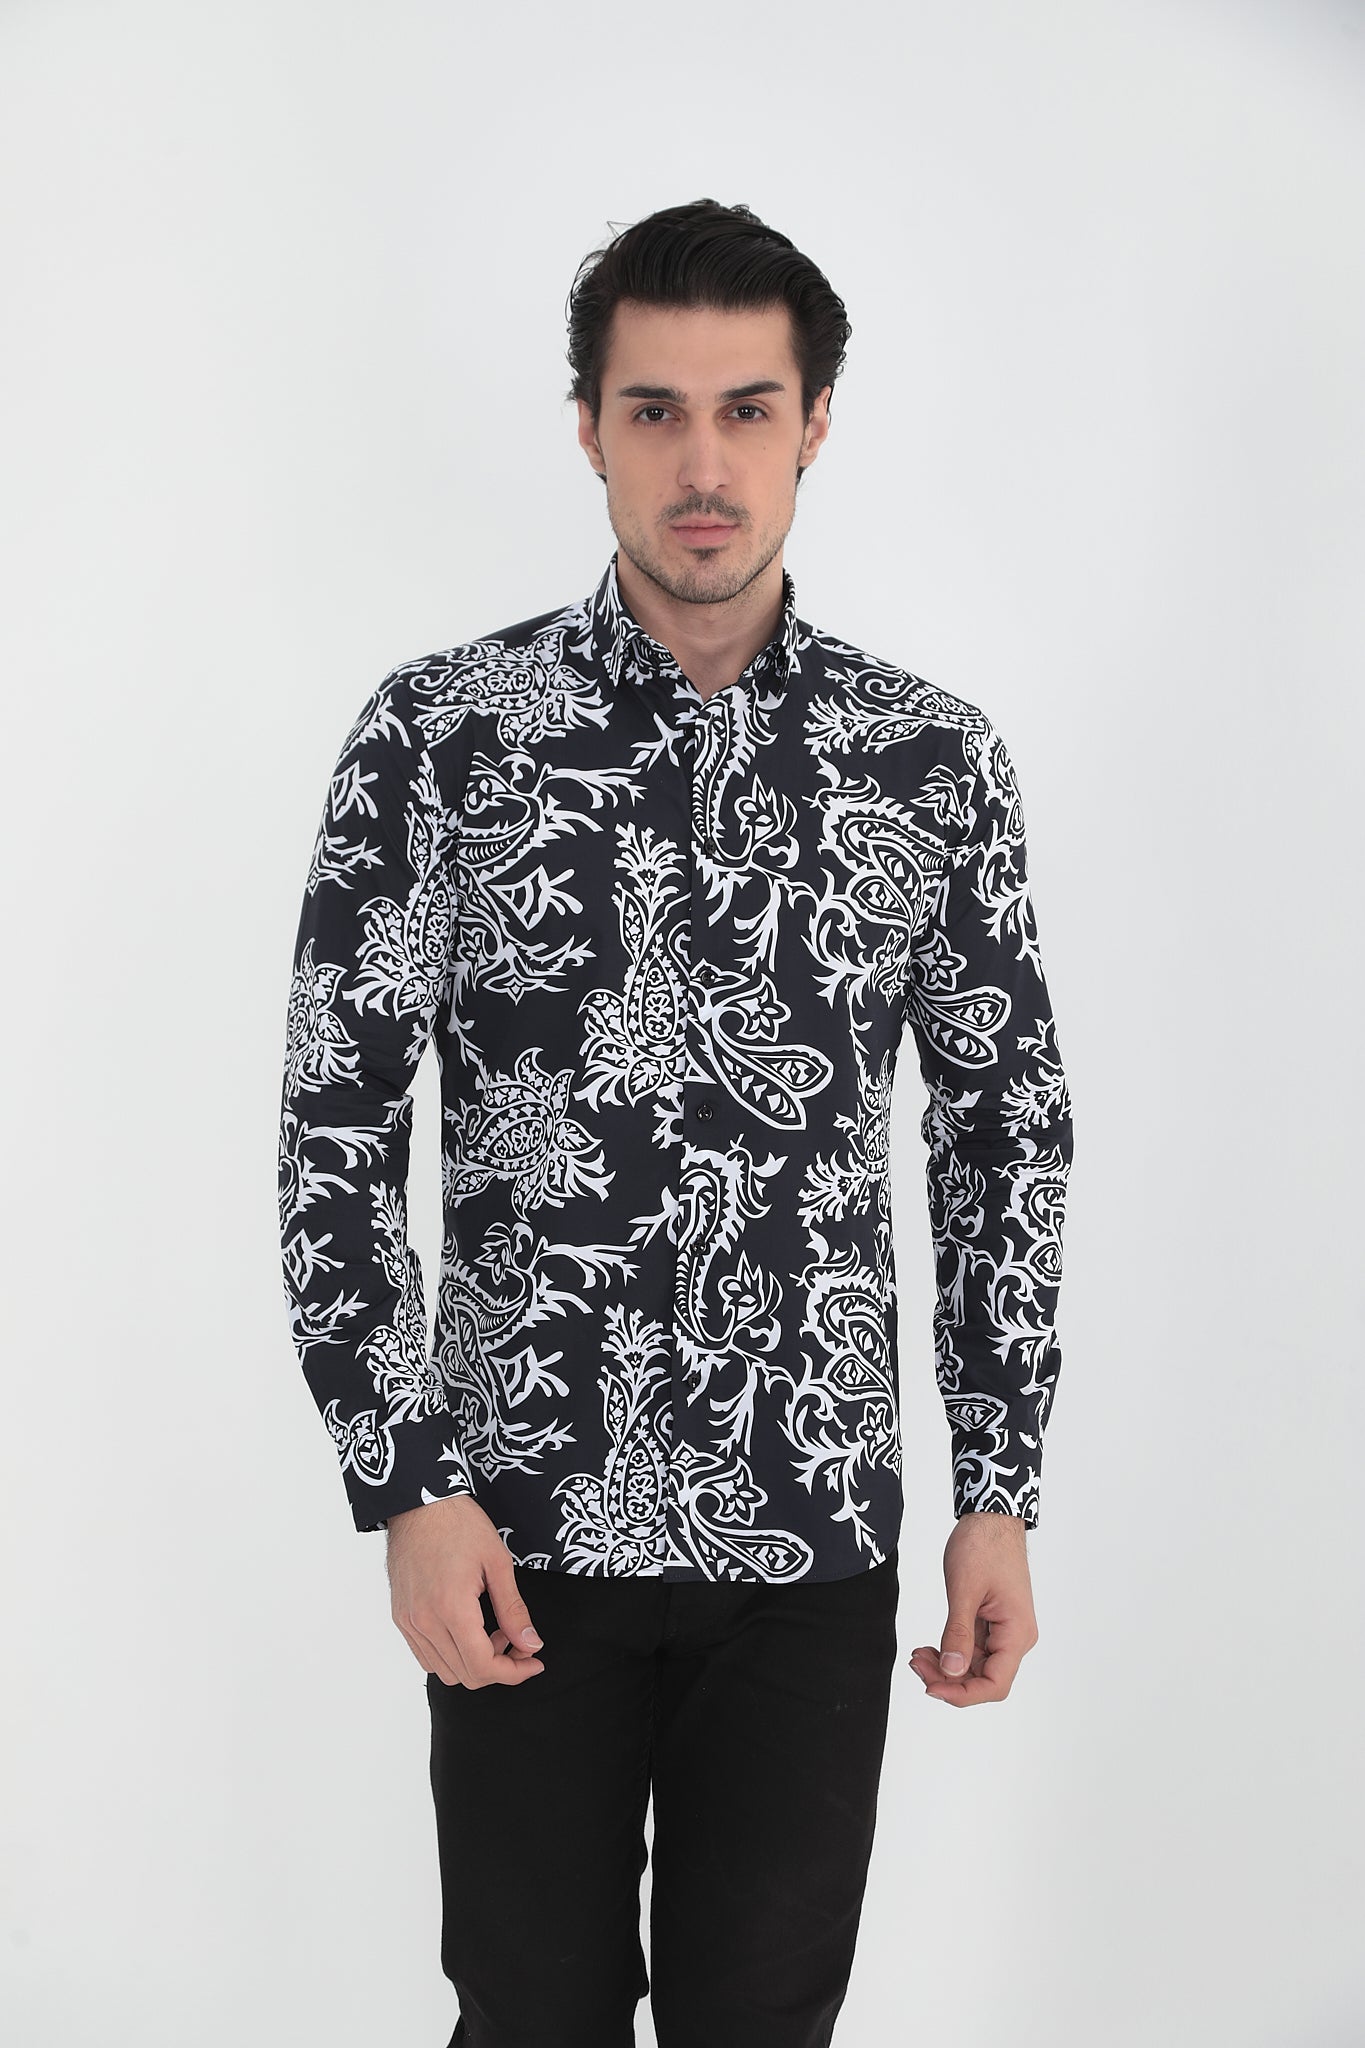 Vercini black shirt with whitte paisley pattern